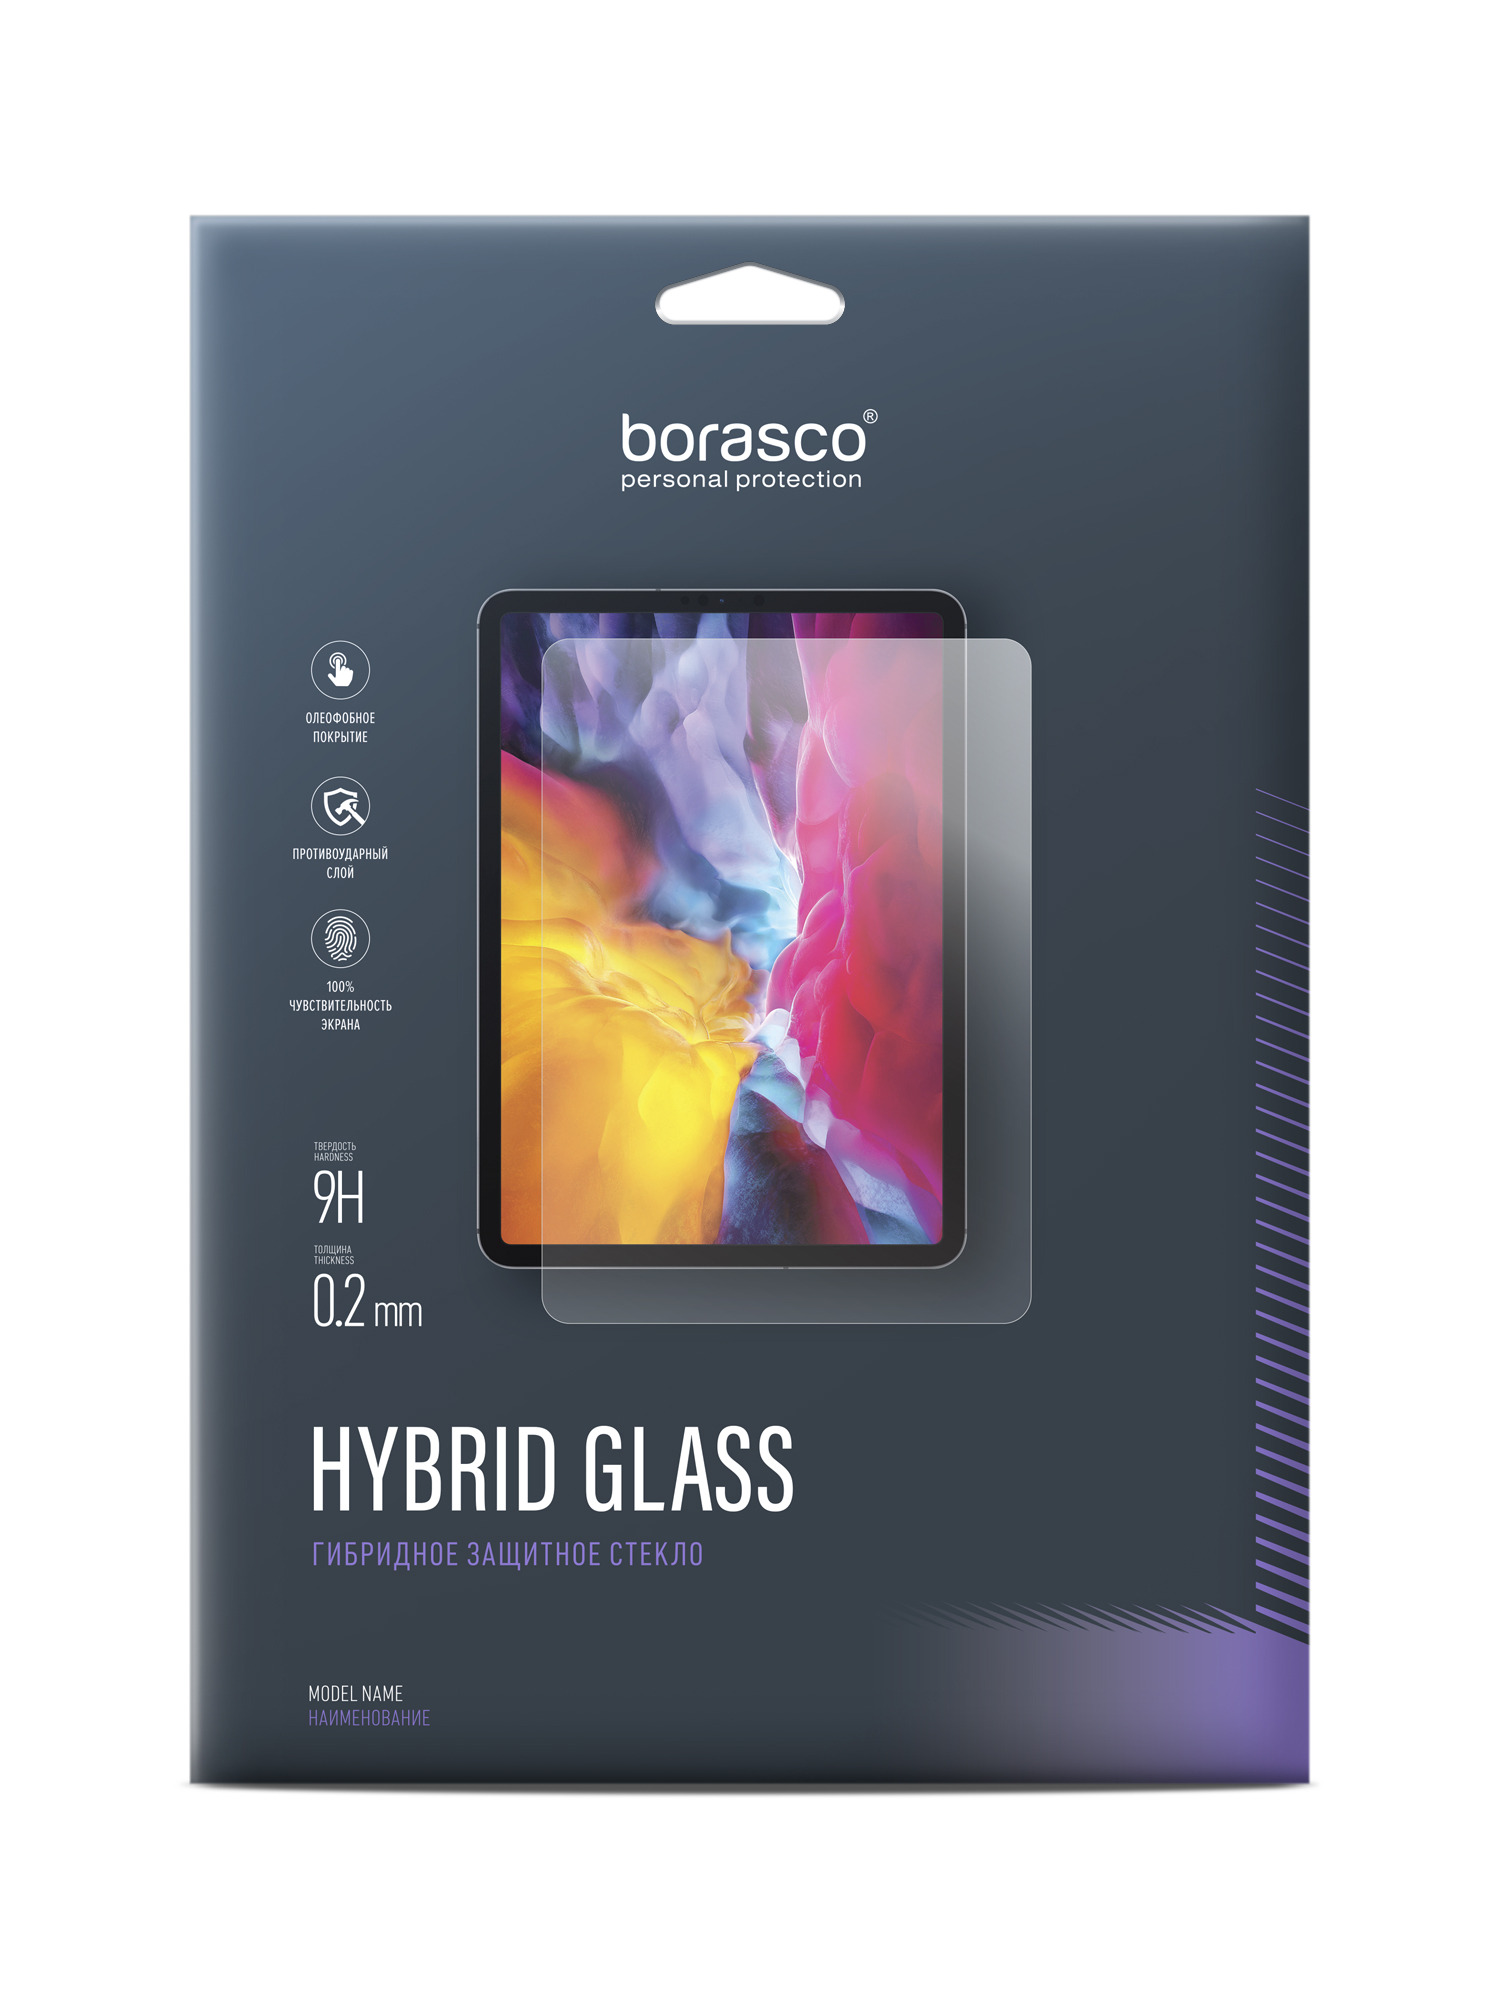 Защитное стекло Hybrid Glass для Sony Xperia Z2 Tablet защитное стекло для sony xperia z3 d6603 2 5d